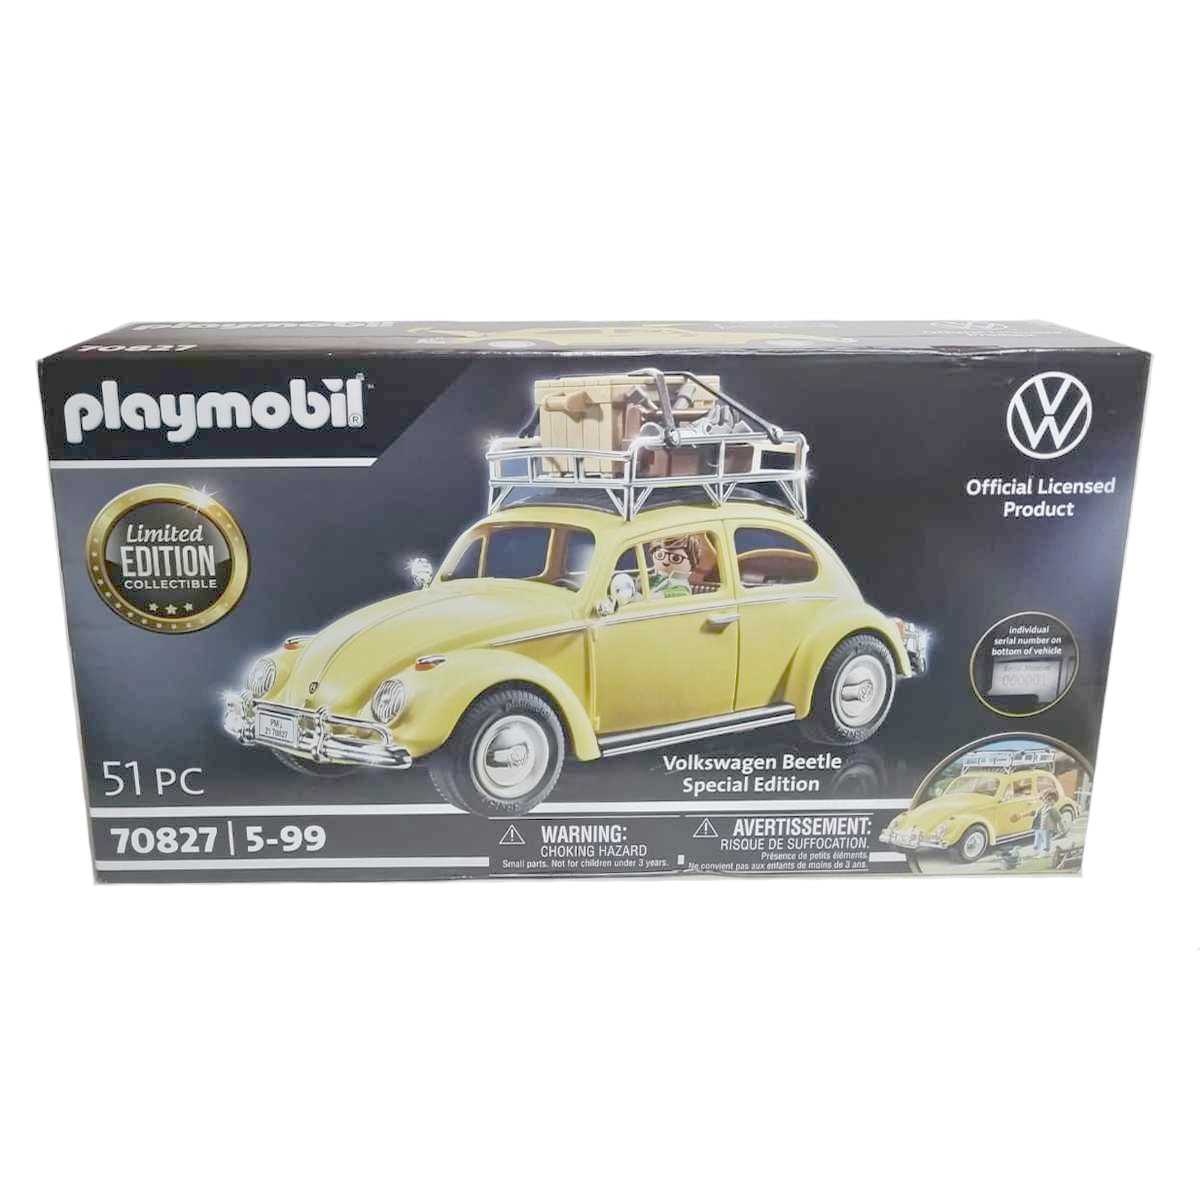 Playmobil 70827 Volkswagen Beetle Special Edition VW Fusca amarelo